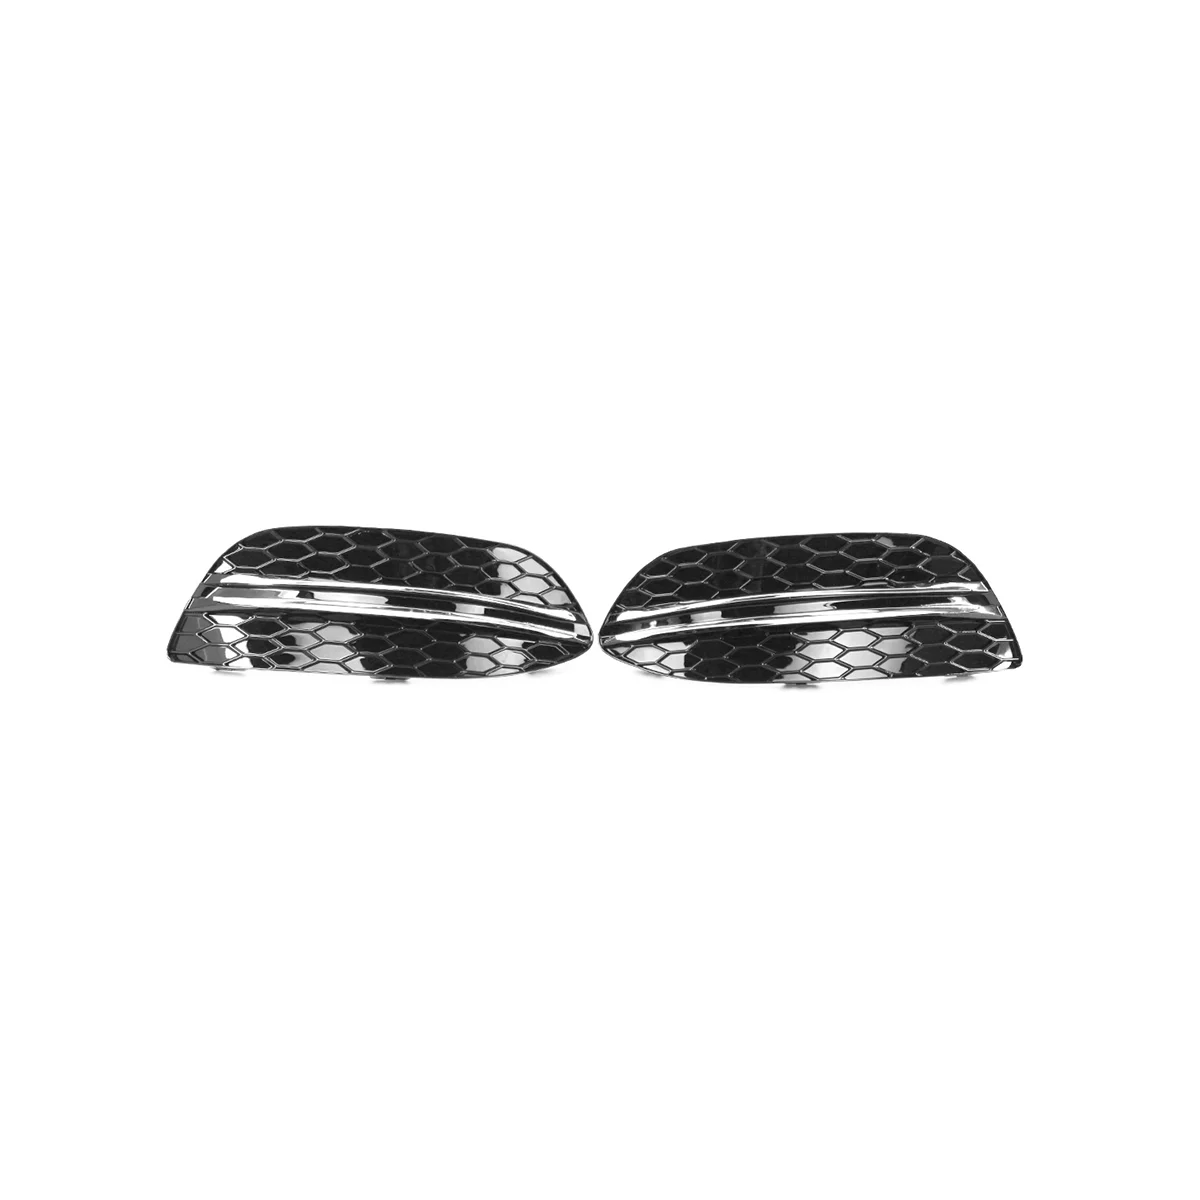 

Car Chrome Front Bumper Grille Fog Light Cover Trims for Mercedes Benz C-Class W205 2058851623 2058851523 2058850823